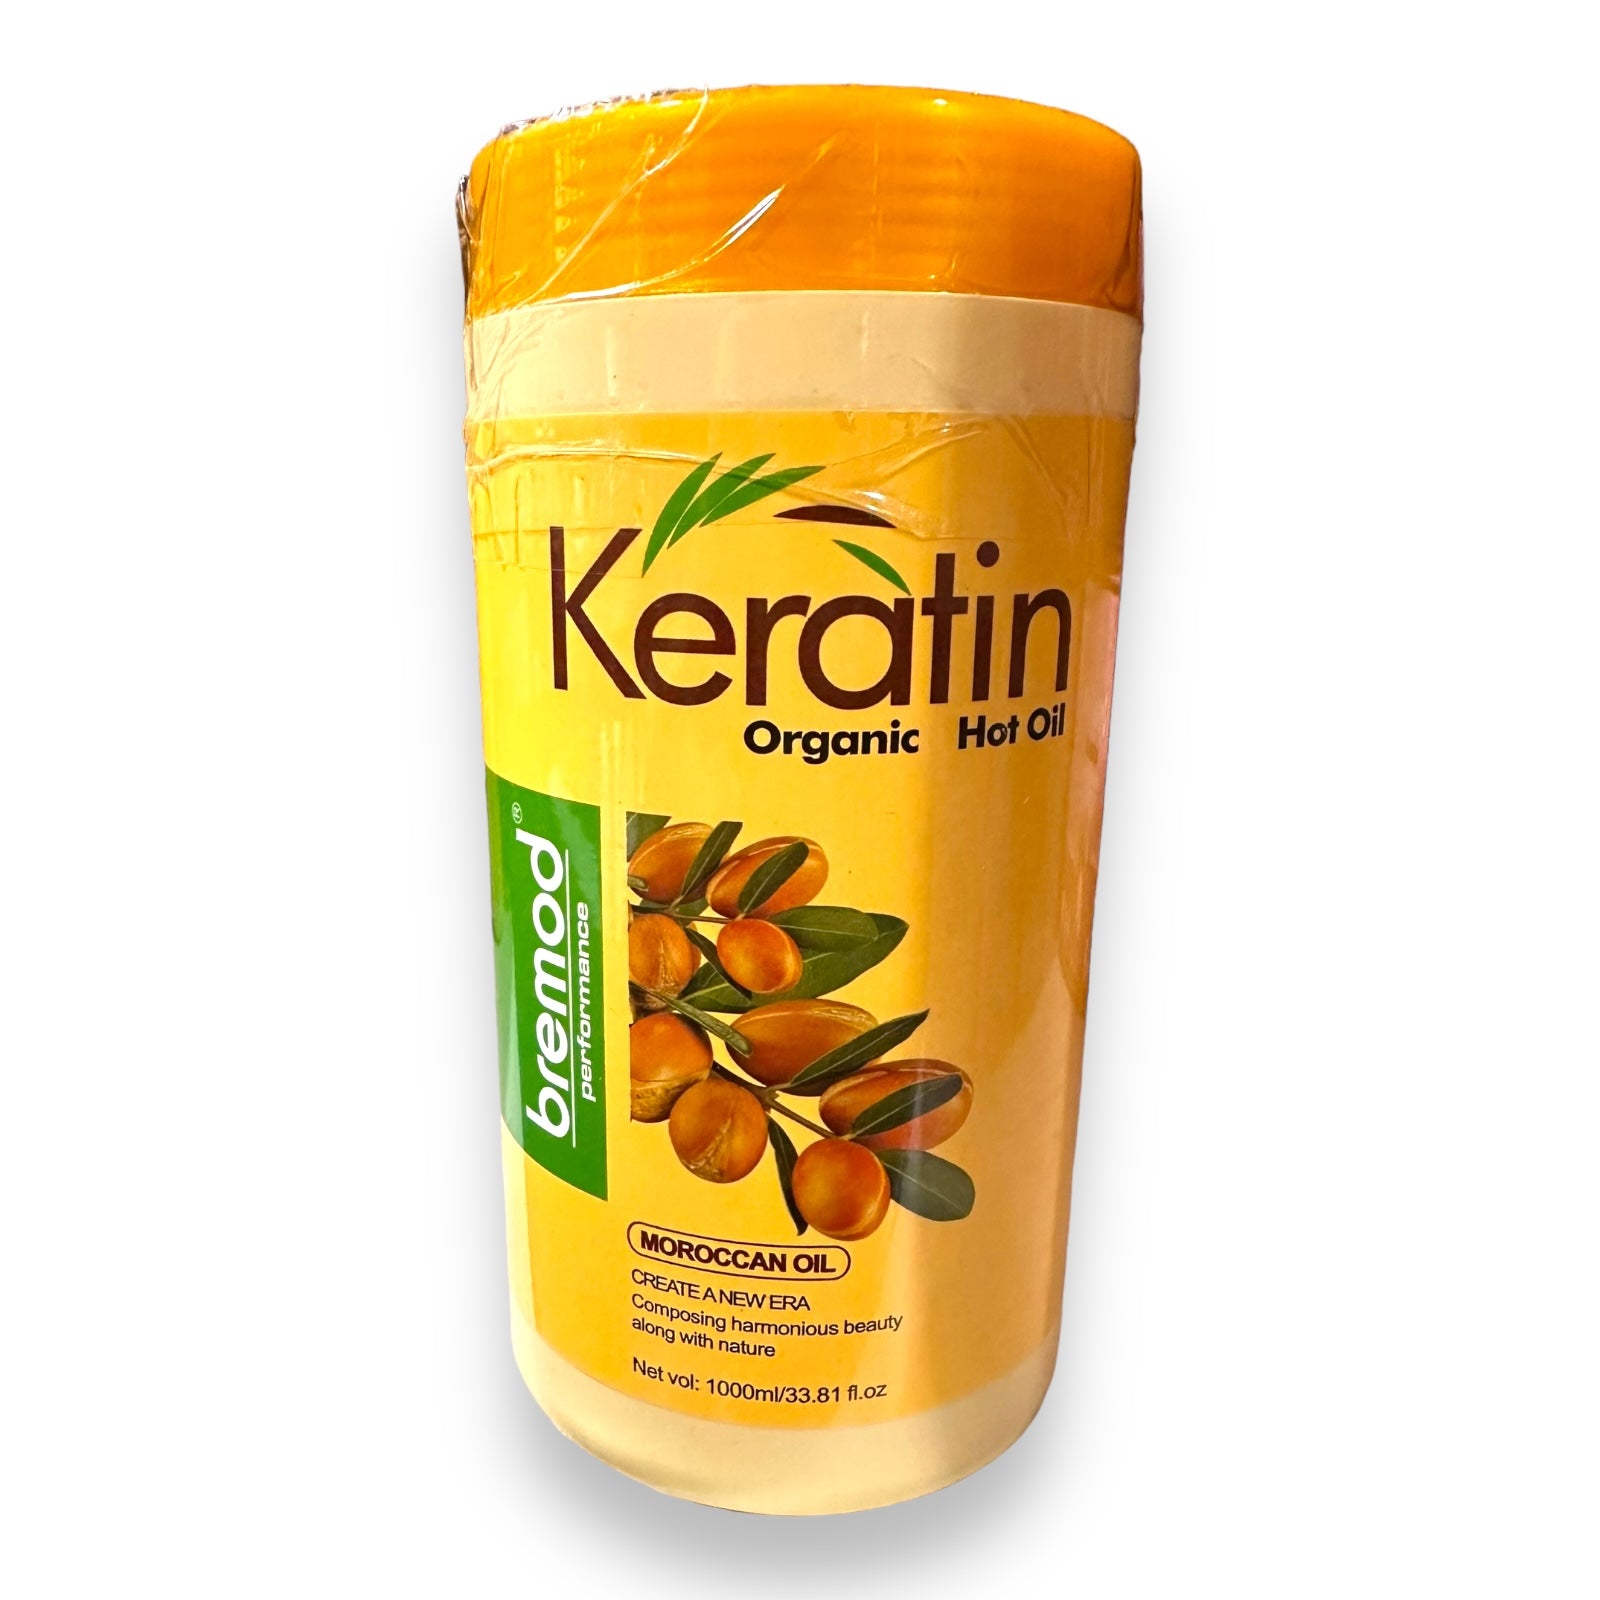 Bremod - Keratin Organic Hot Oil - Moroccan Oil Treatment 1000 mL